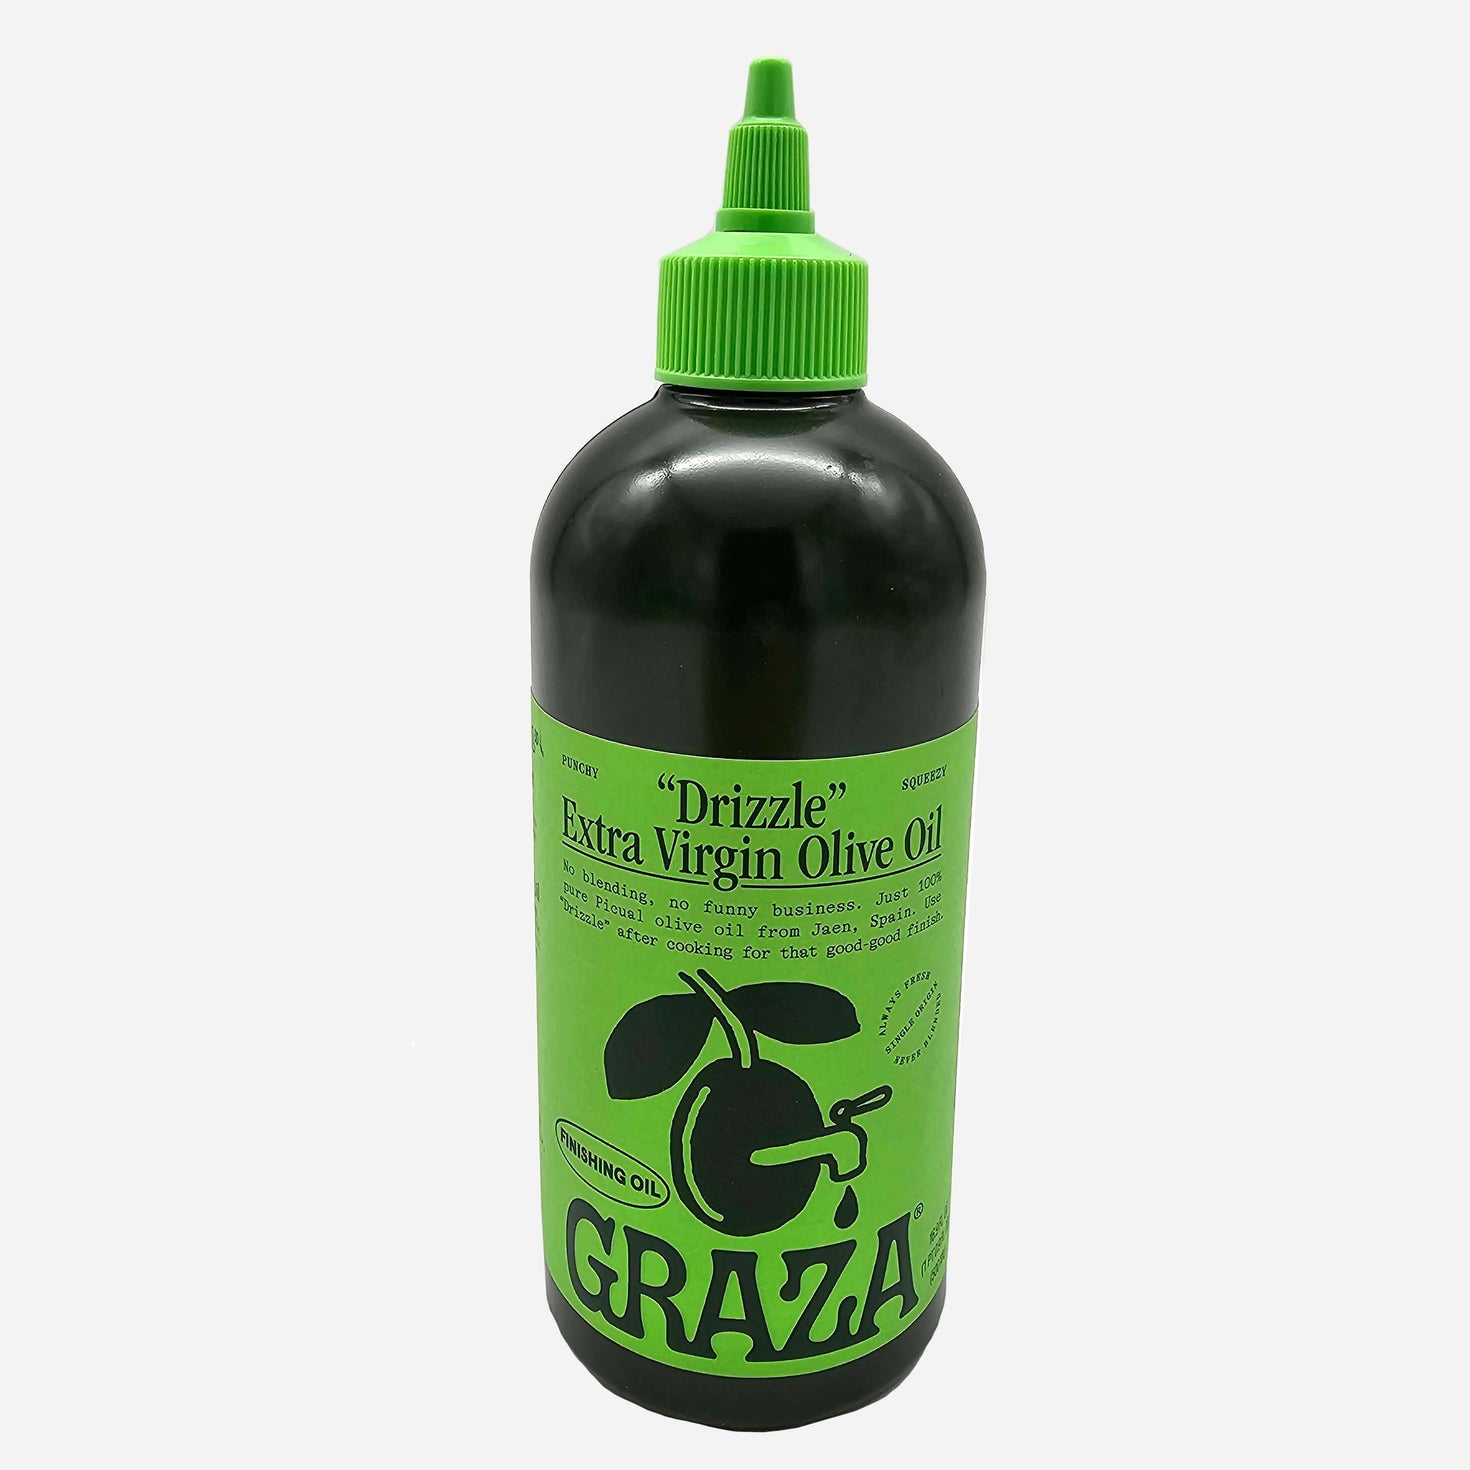 Graza Extra Virgin Olive Oil Drizzle Finishing Oil 16.0oz